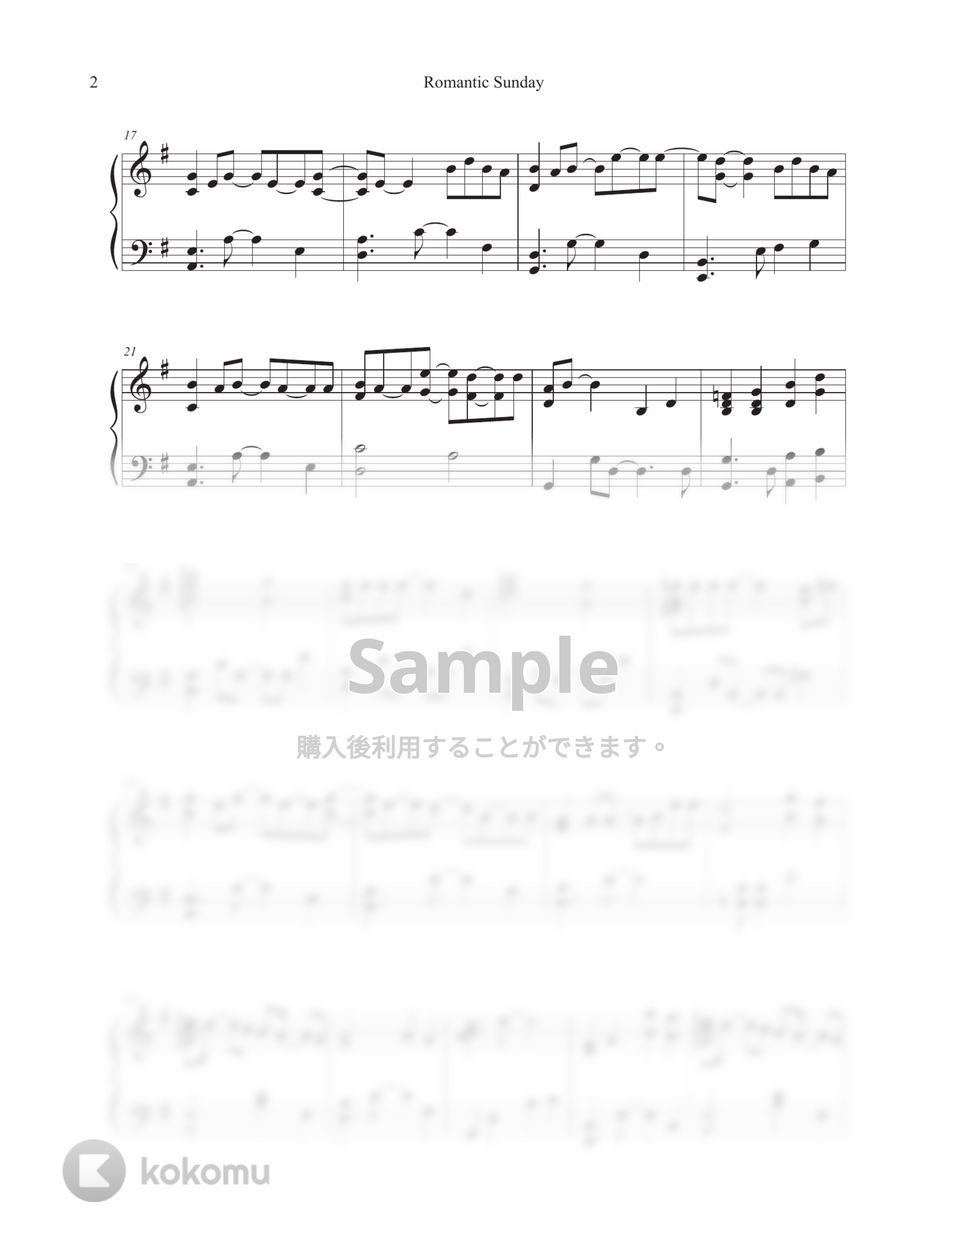 Car, the Garden - Romantic Sunday (海街チャチャチャ OST. Part 1) by Tully Piano